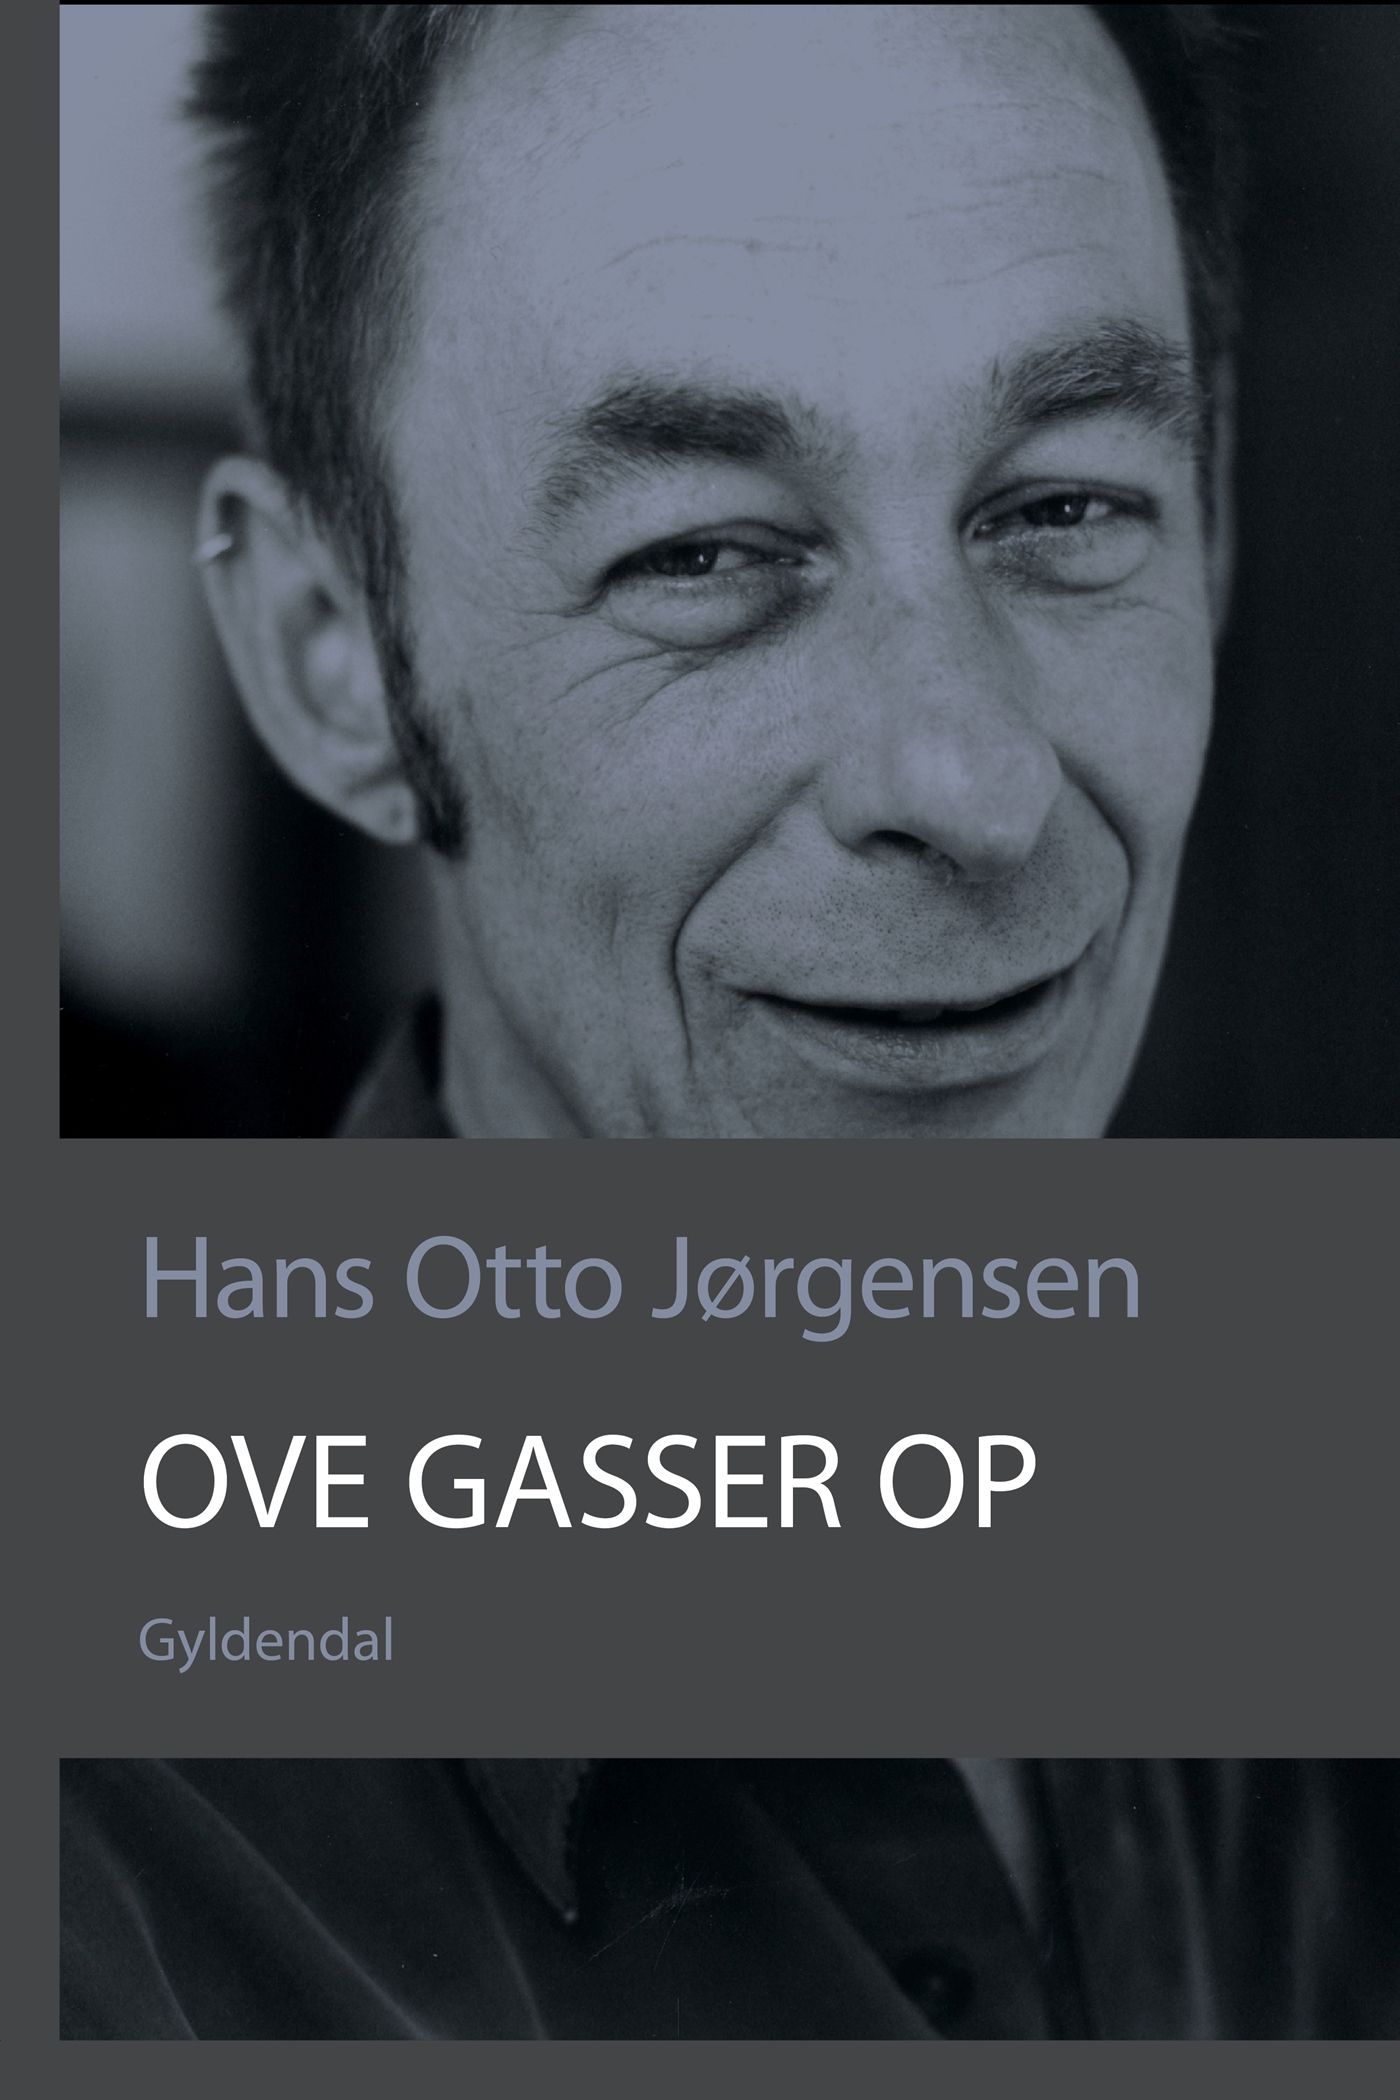 Ove gasser op, eBook by Hans Otto Jørgensen